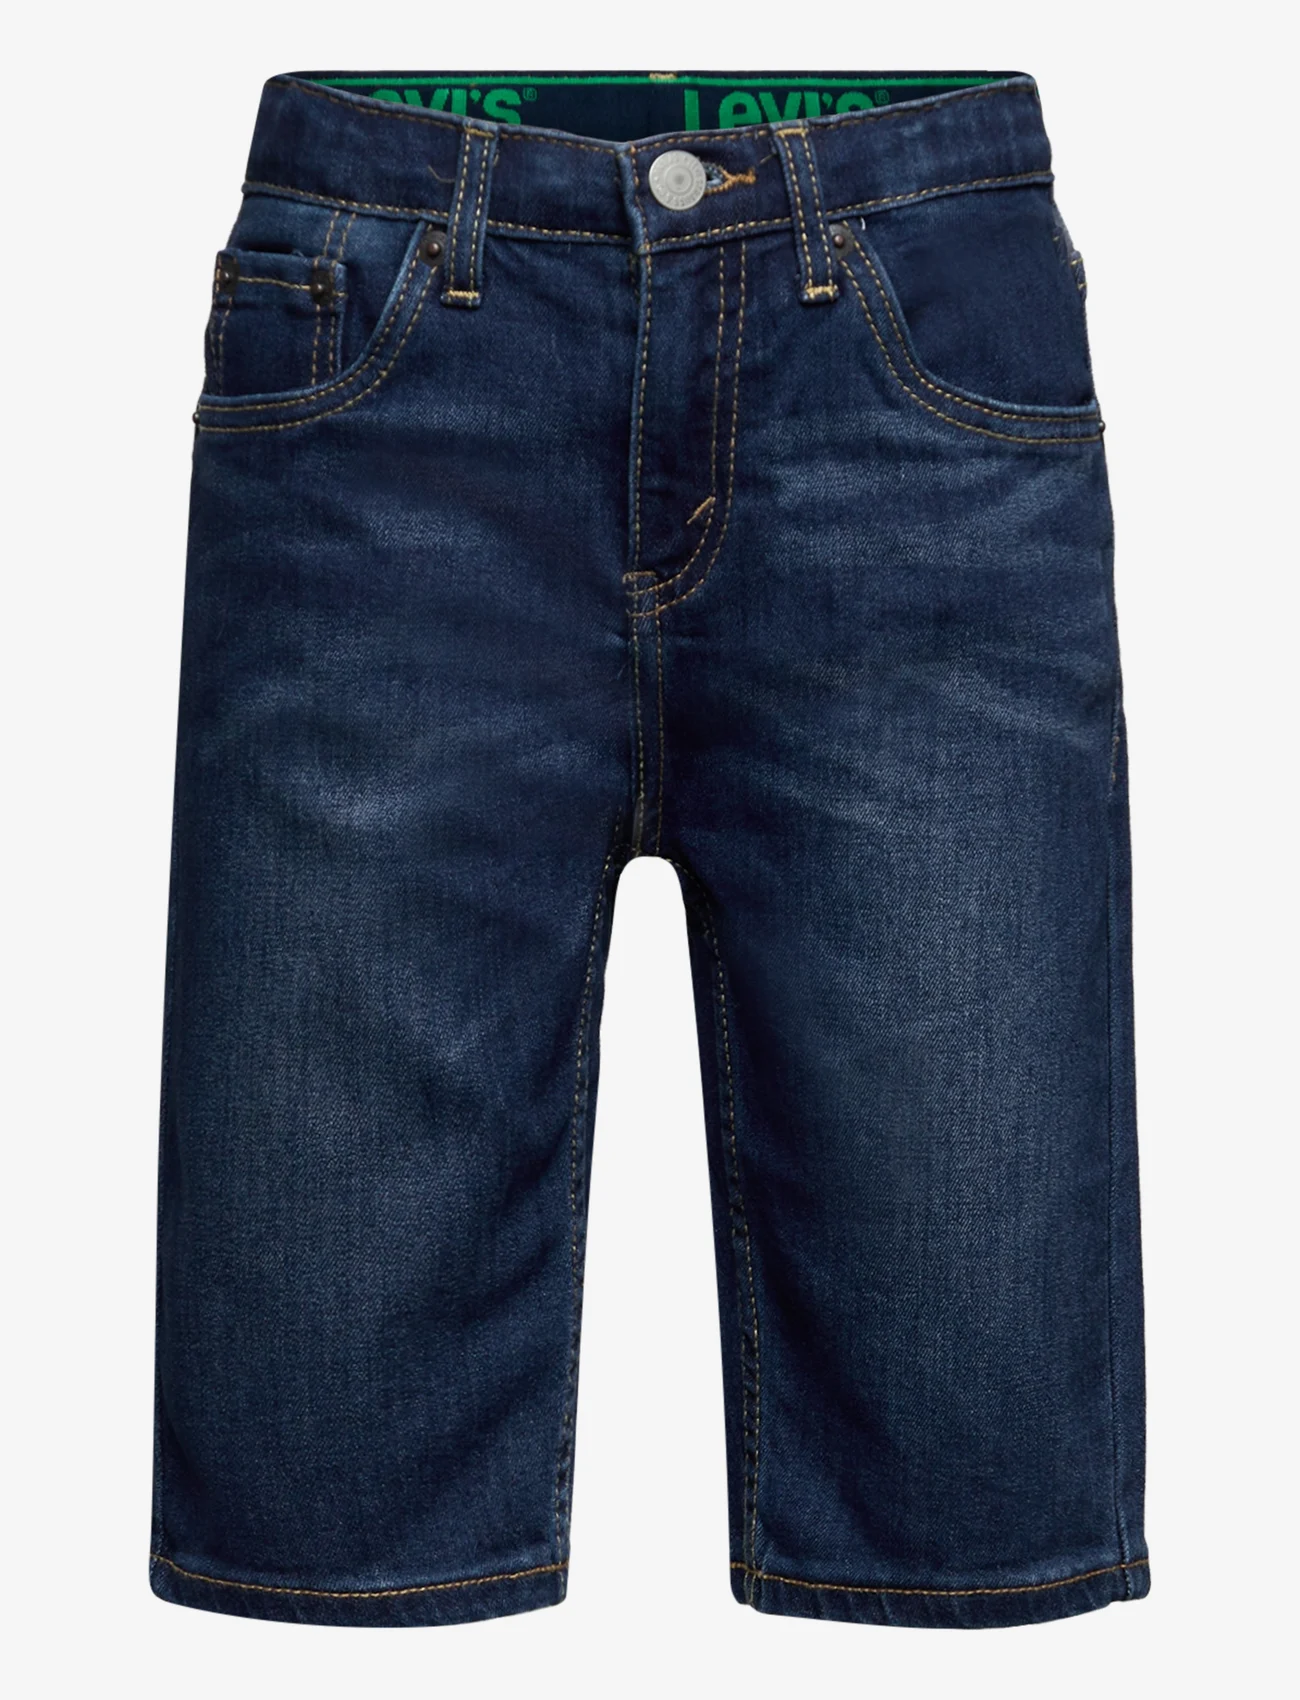 Levi's - Levi's® Slim Fit Eco Performance Shorts - jeansshorts - blue - 0